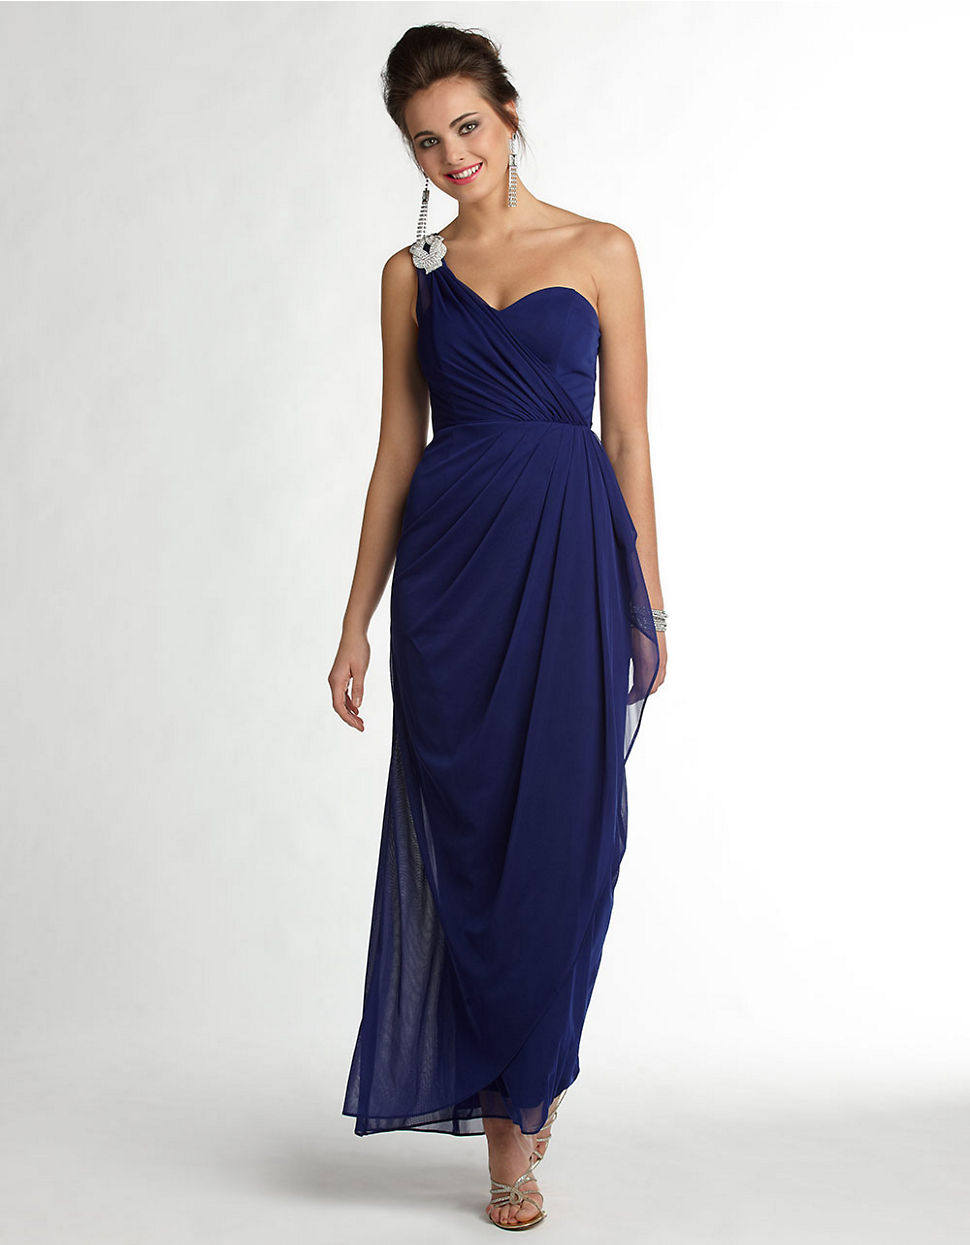 Lyst - Xscape One Shoulder Sweetheart Neckline Gown in Blue